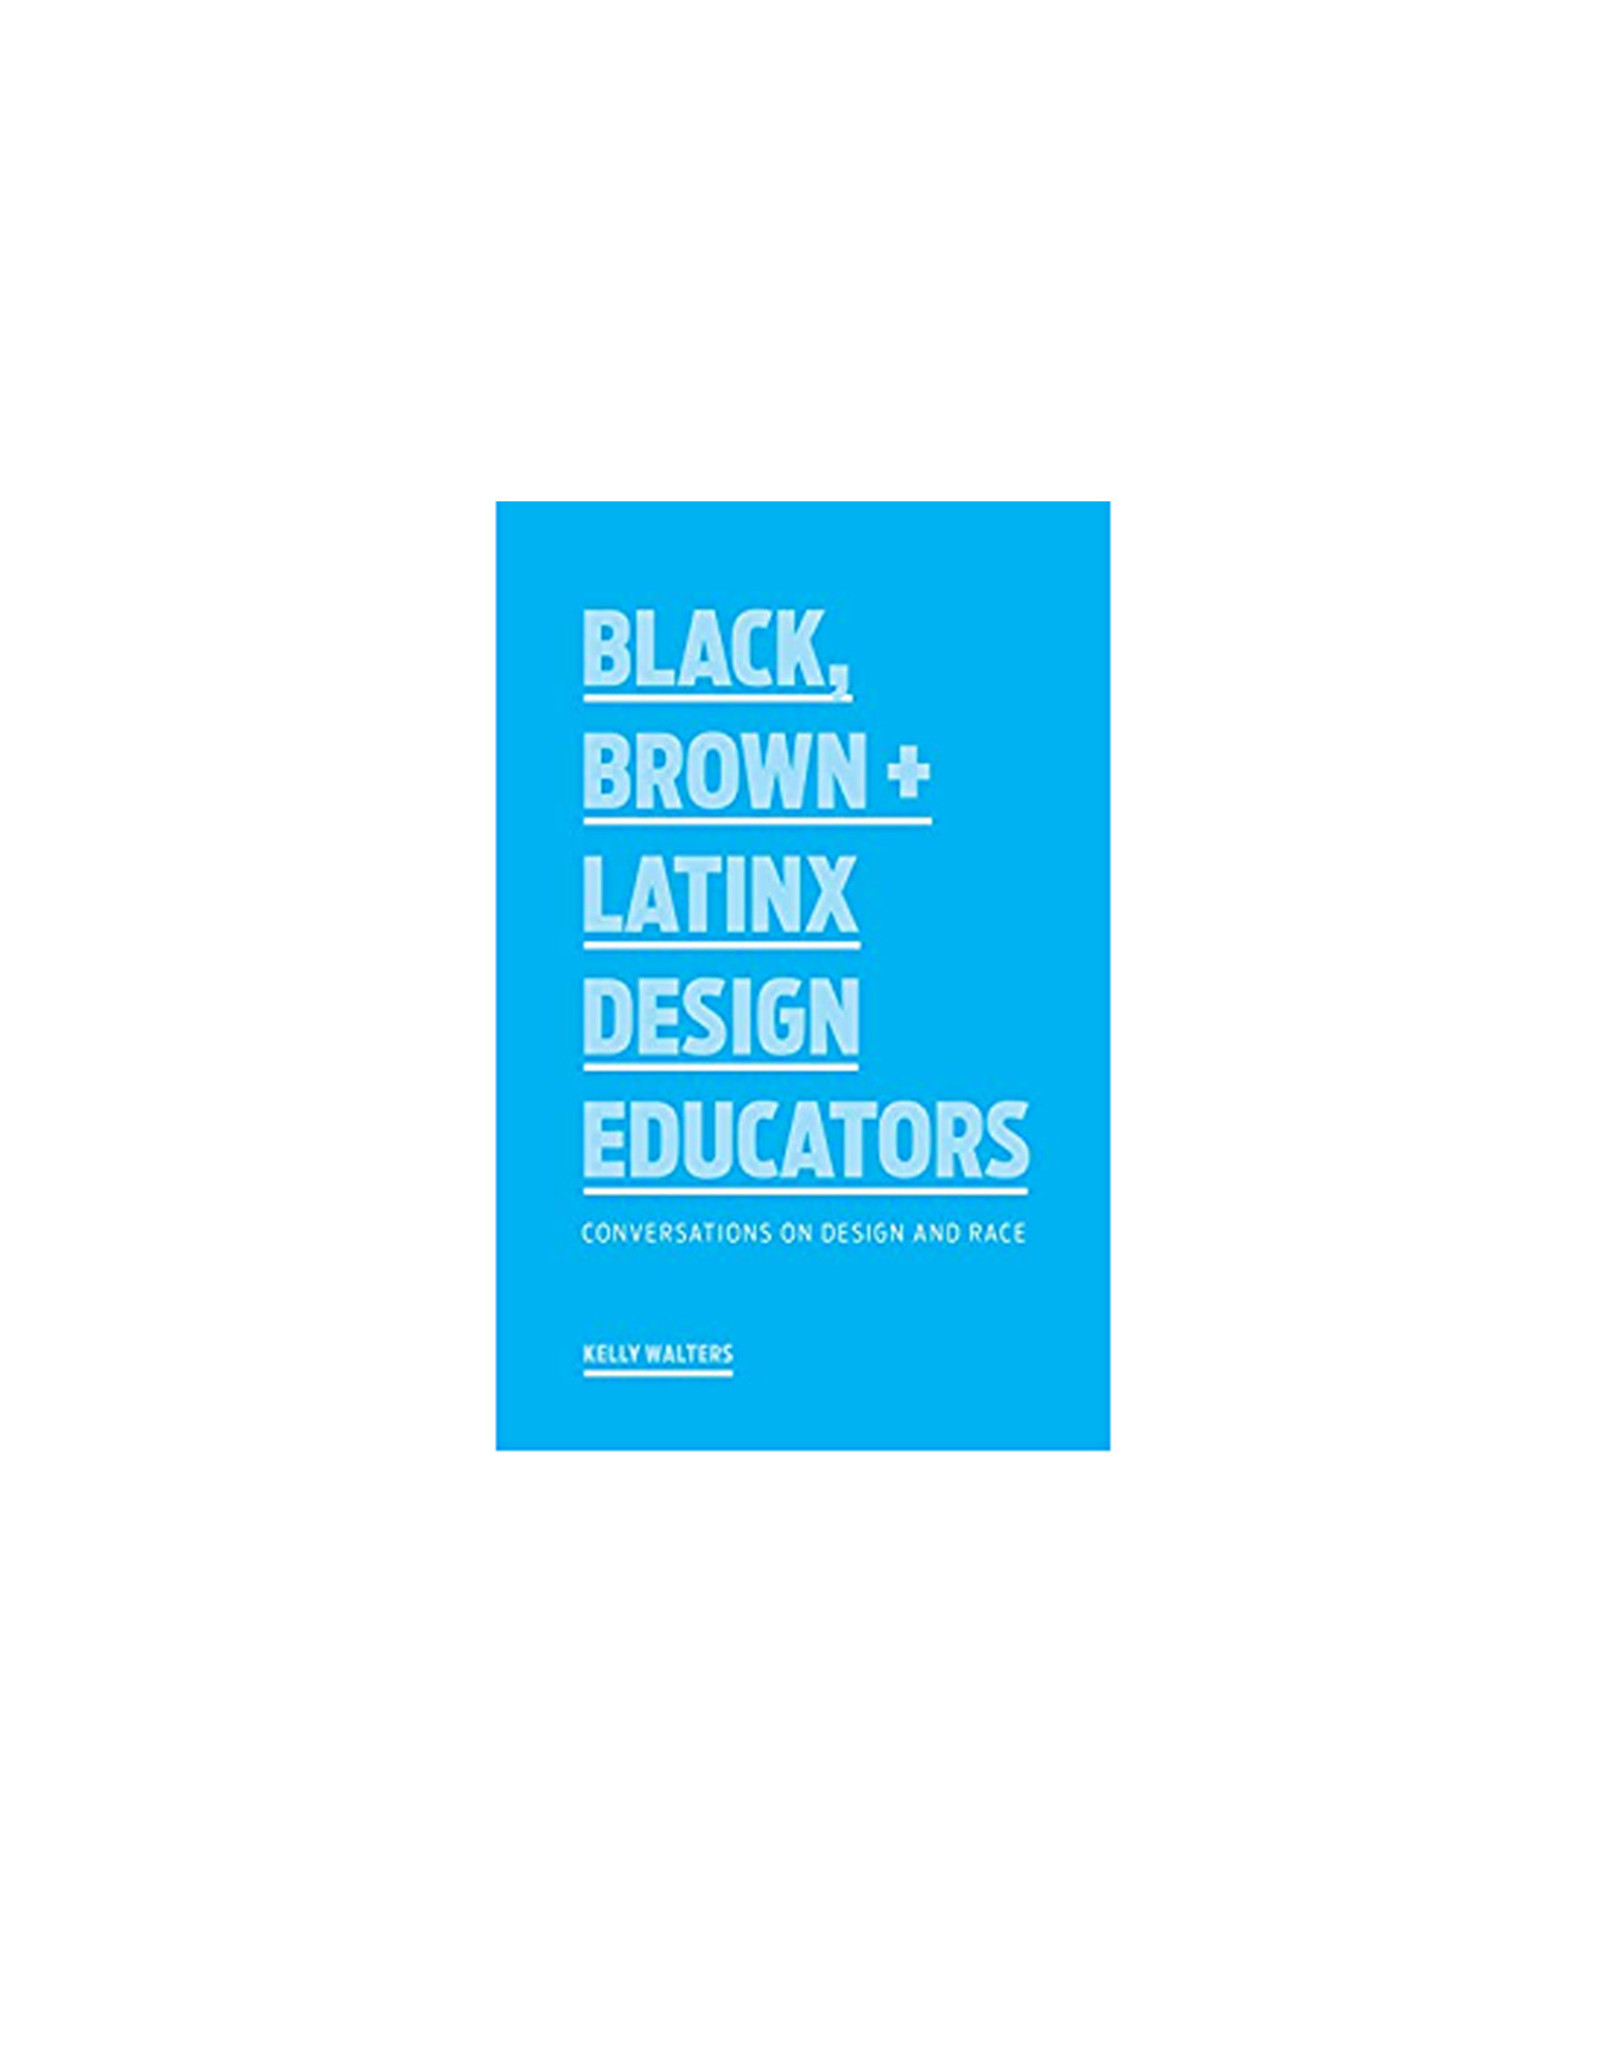 In Conversation with Black, Brown + Latinx Design Educators